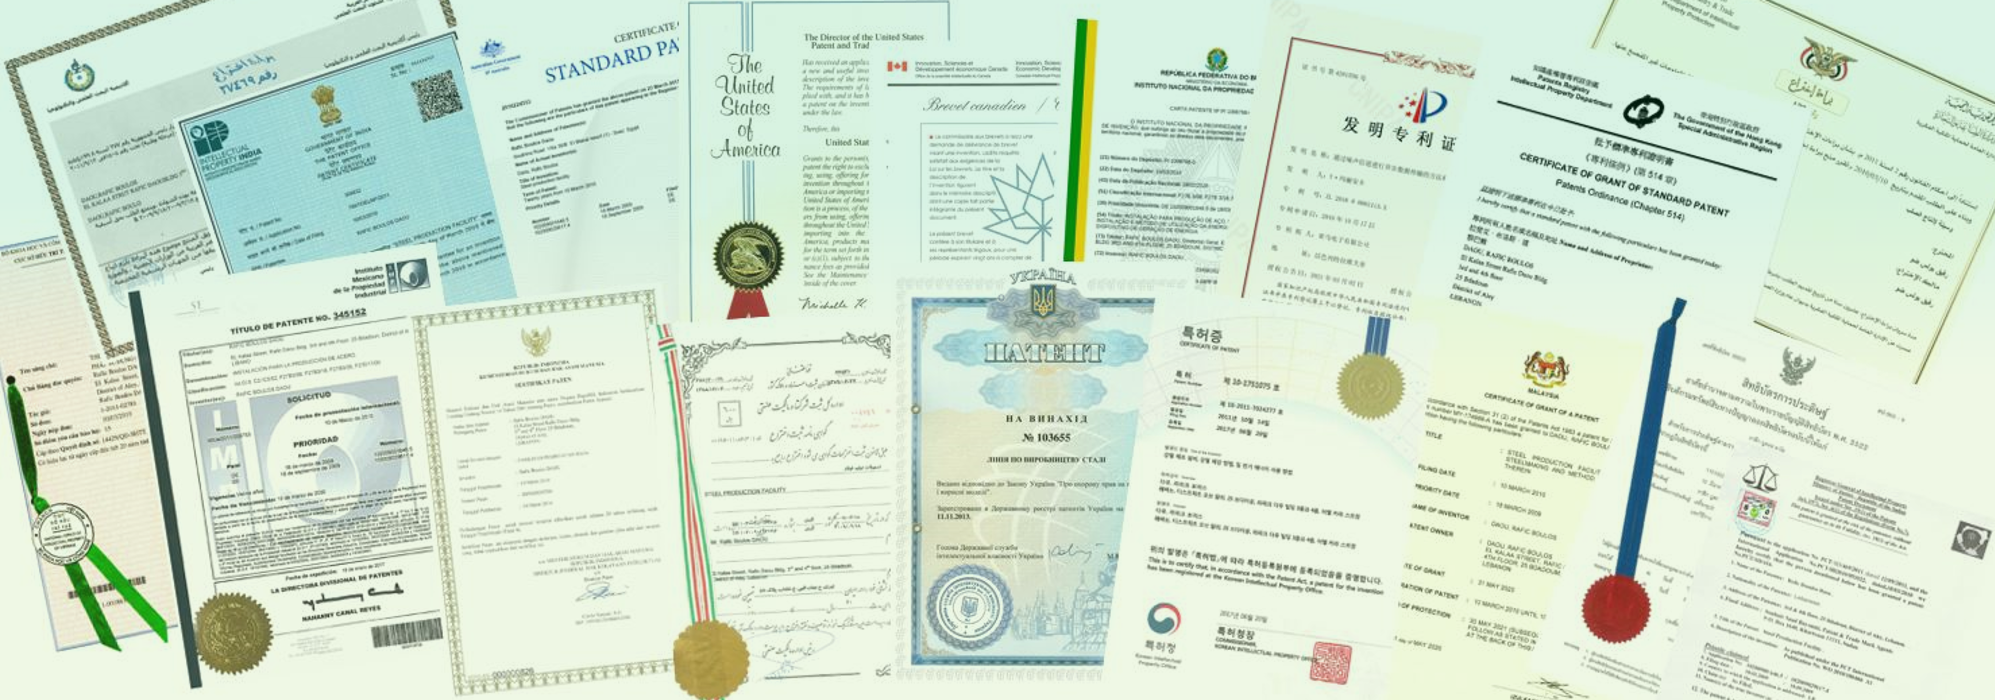 International Patent Certificate